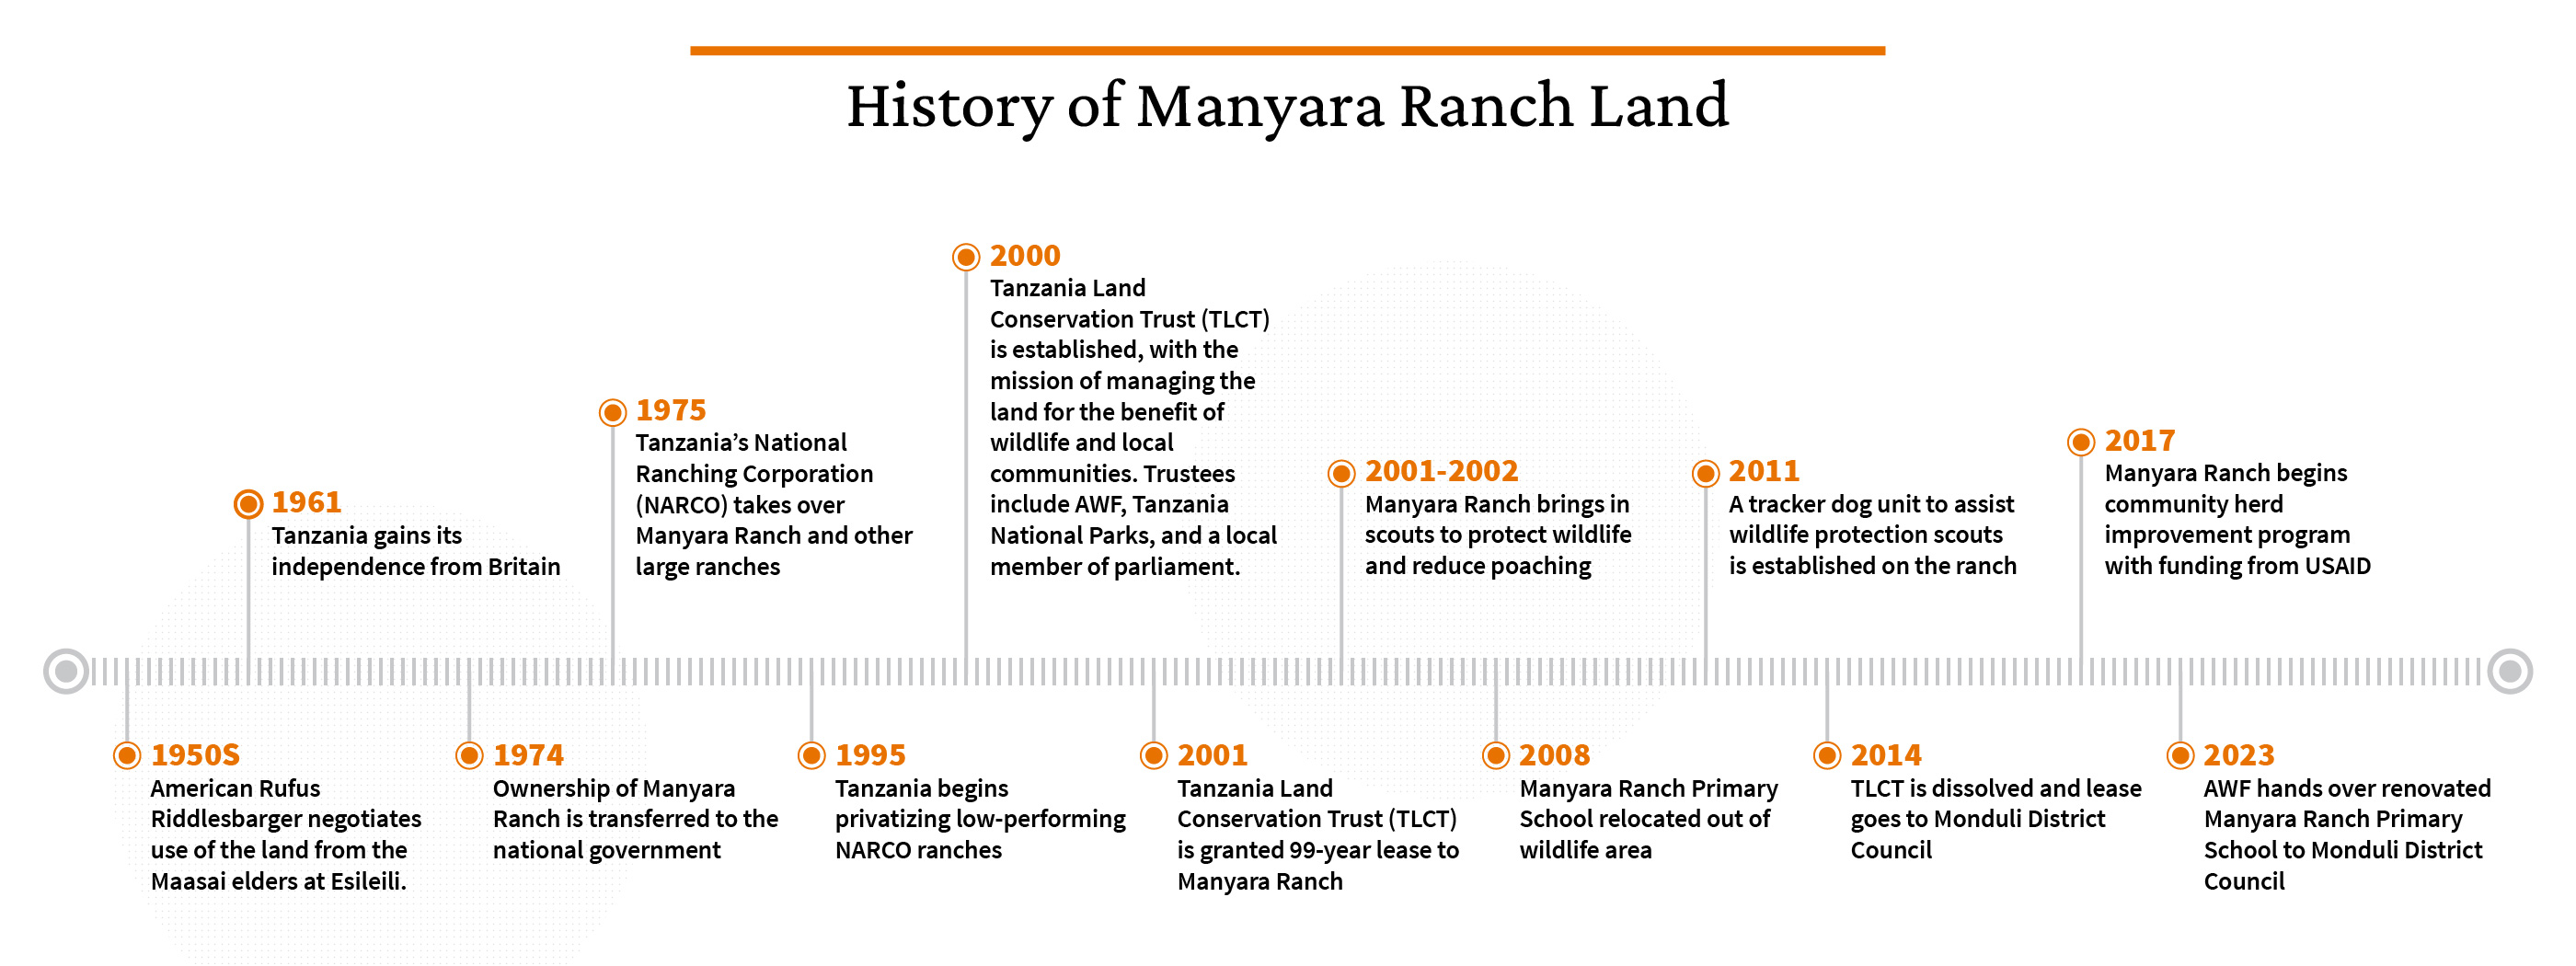 Manyara Ranch Timeline